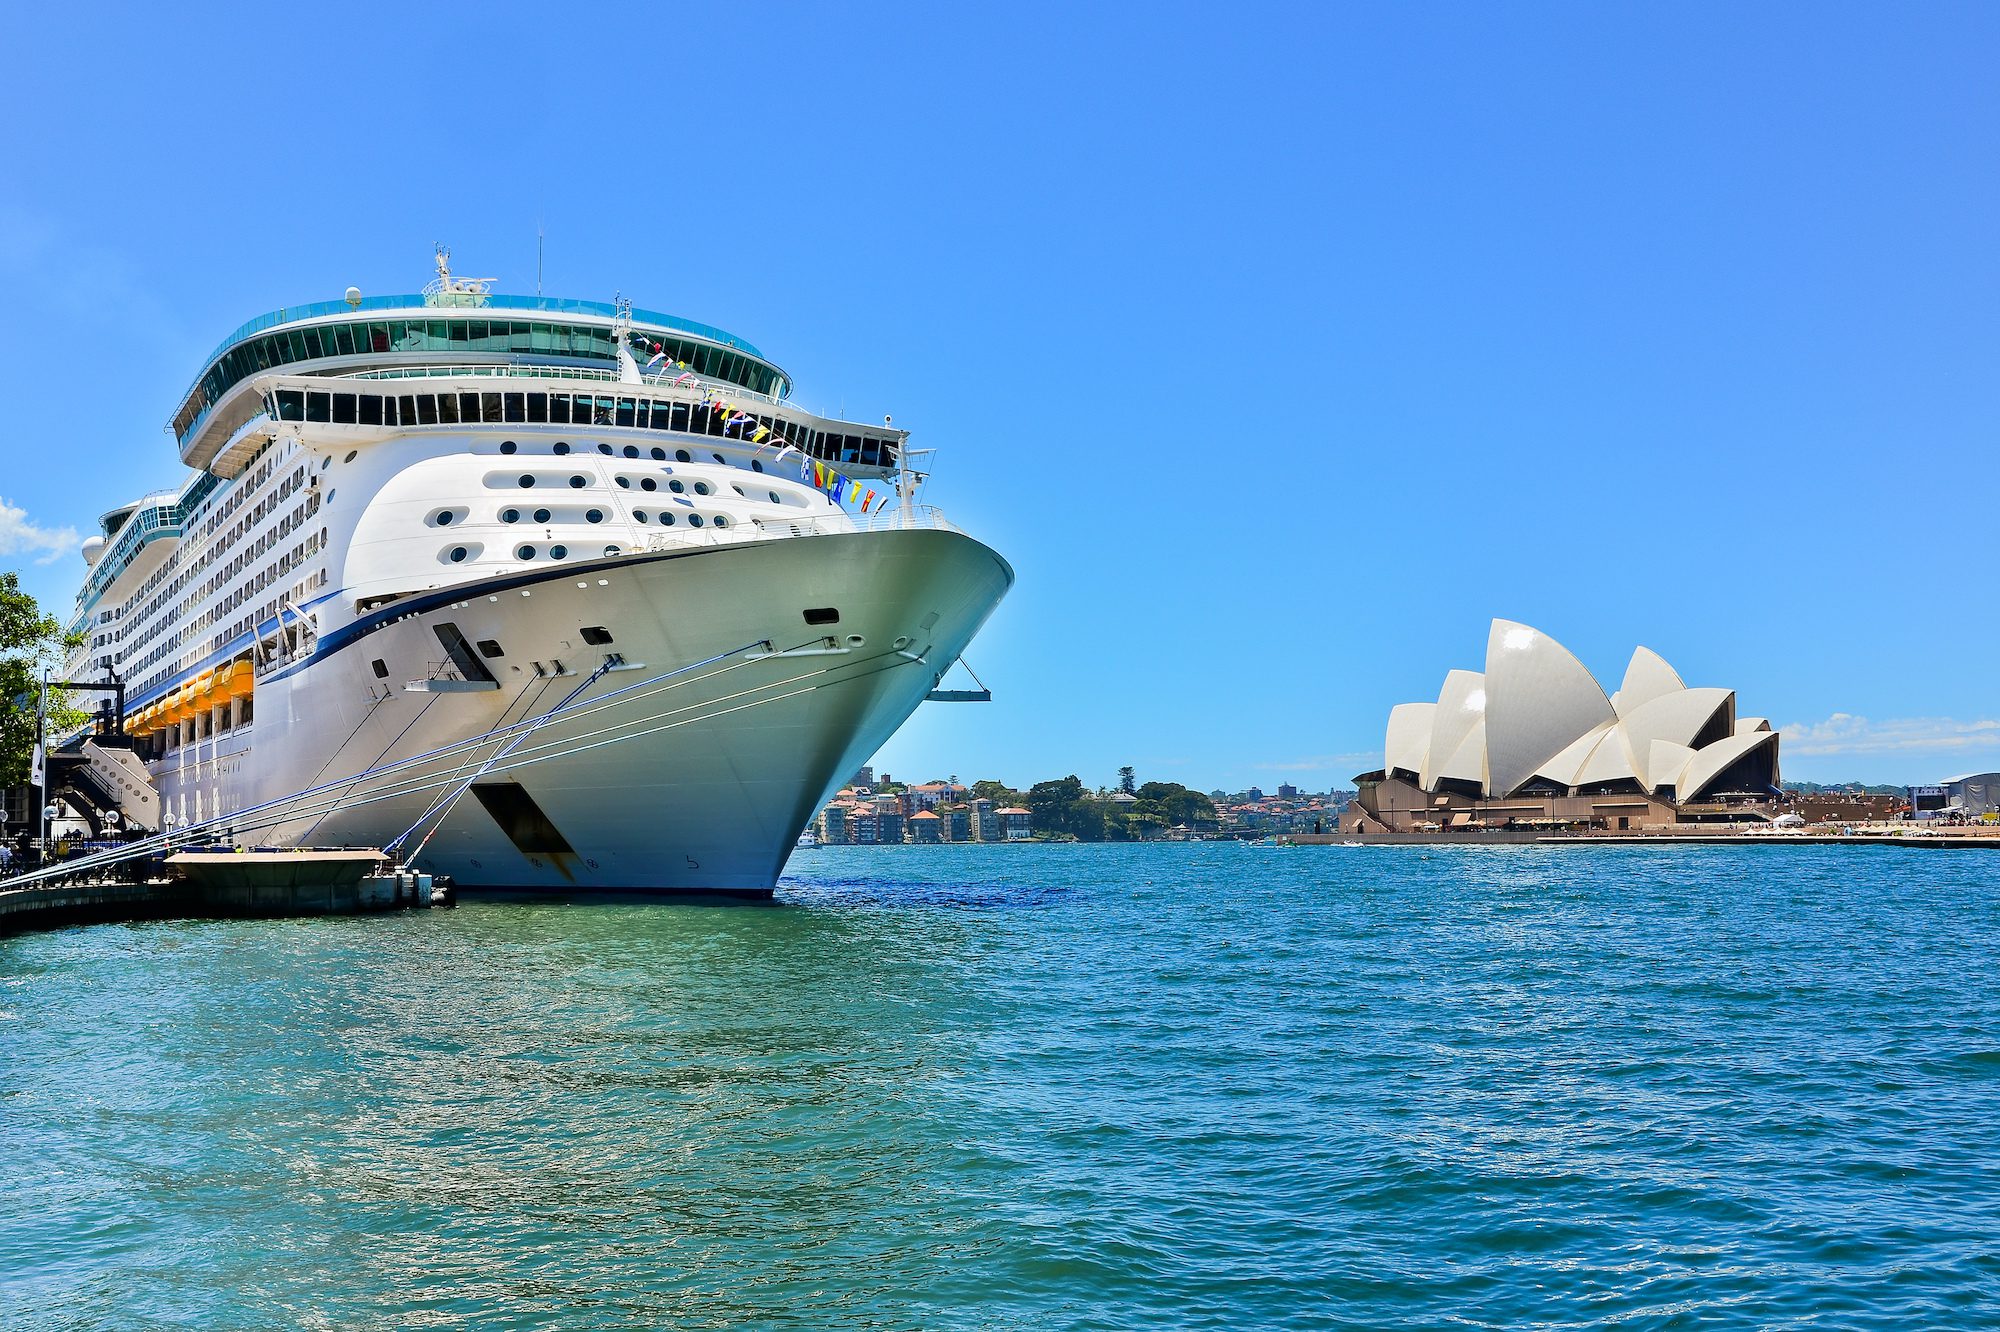 Australia to Lift COVID-19 Cruise Ban